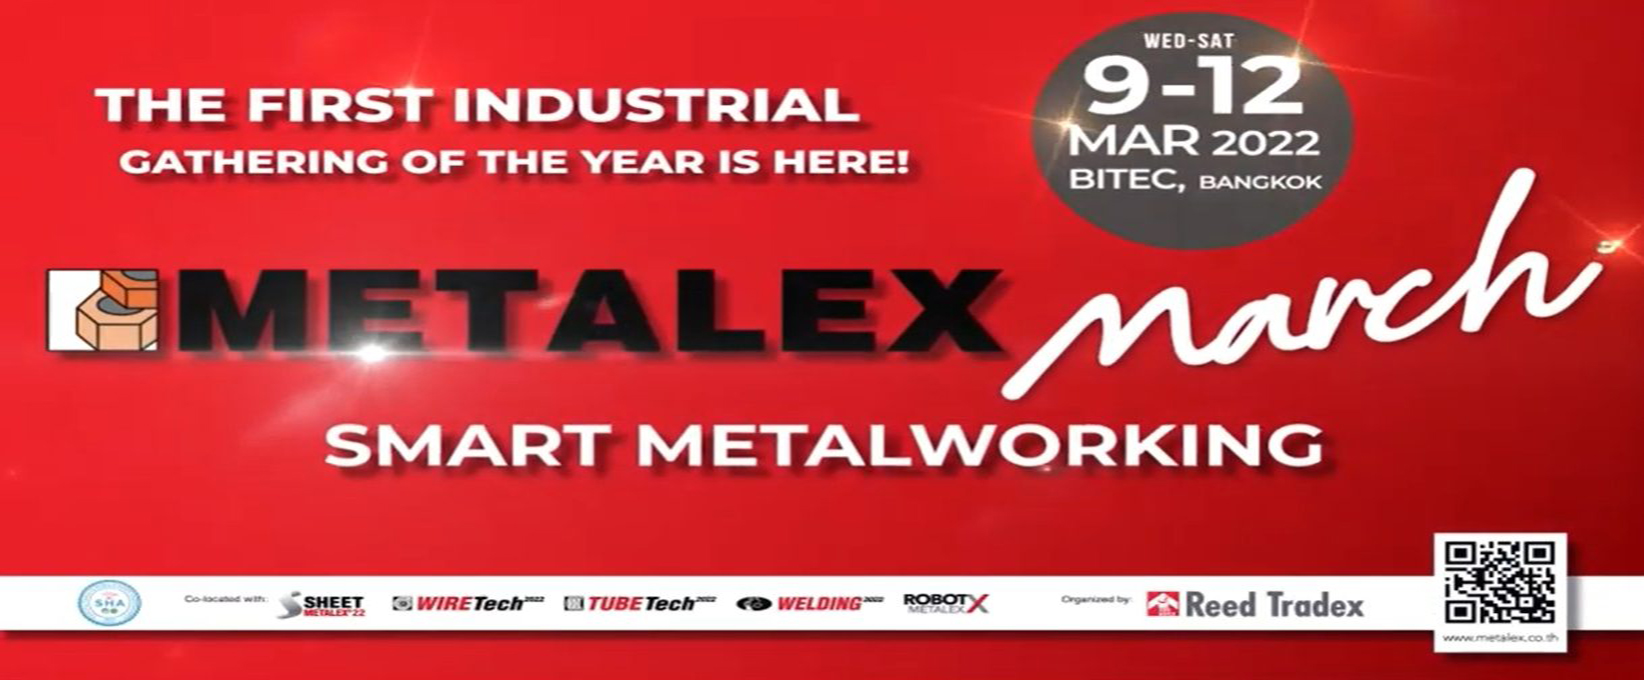 Exhibition Show (Metalex March 2022)